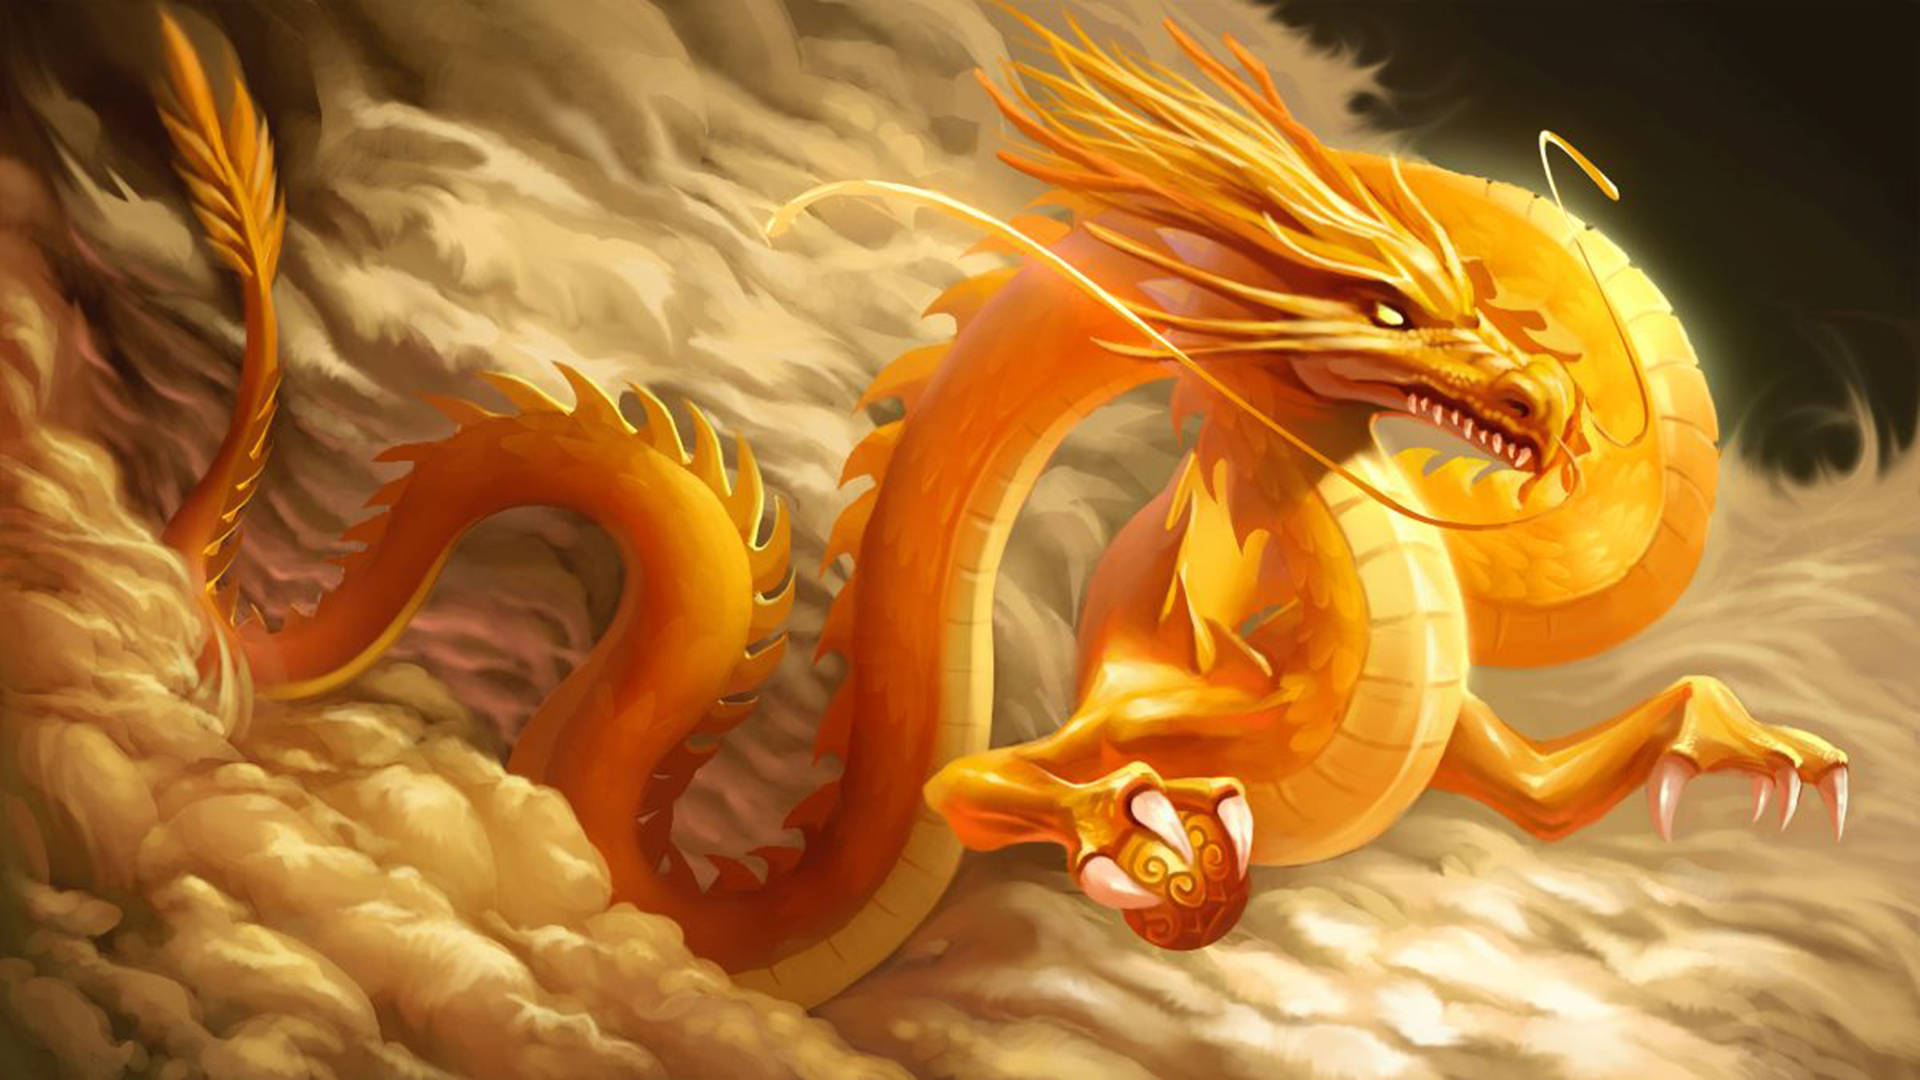 Free Eastern Dragon Wallpaper Downloads, Eastern Dragon Wallpaper for FREE